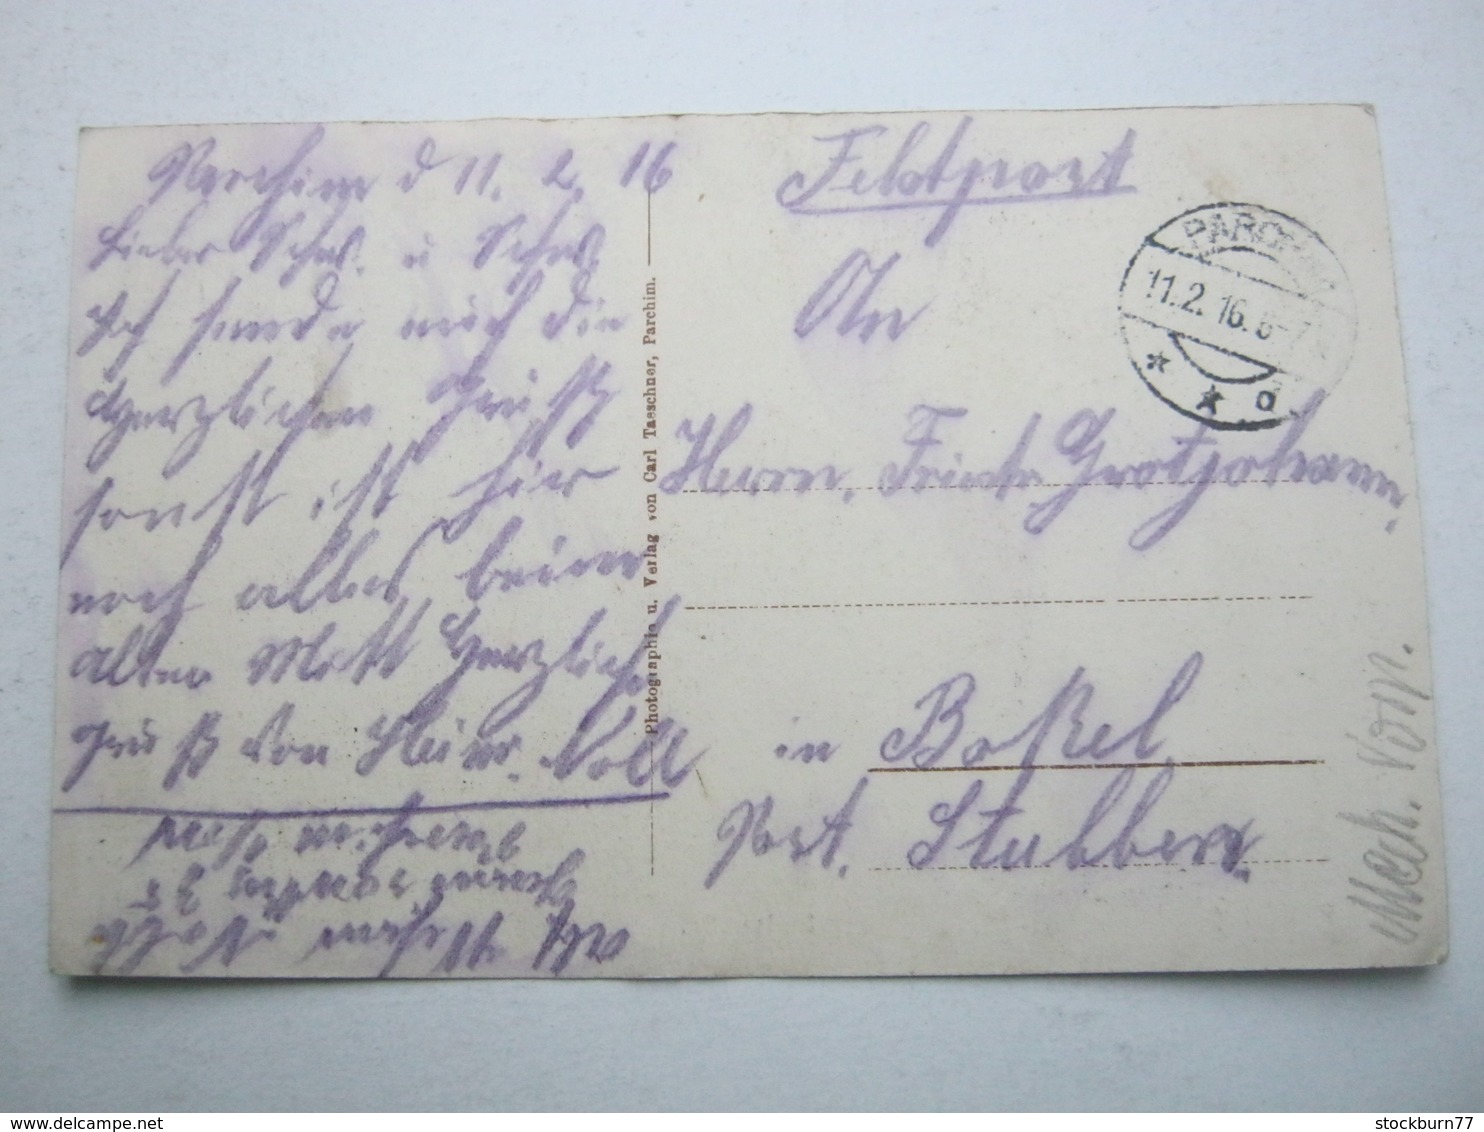 PARCHIM , Strasse ,Seltene Karte Um 1916 - Parchim